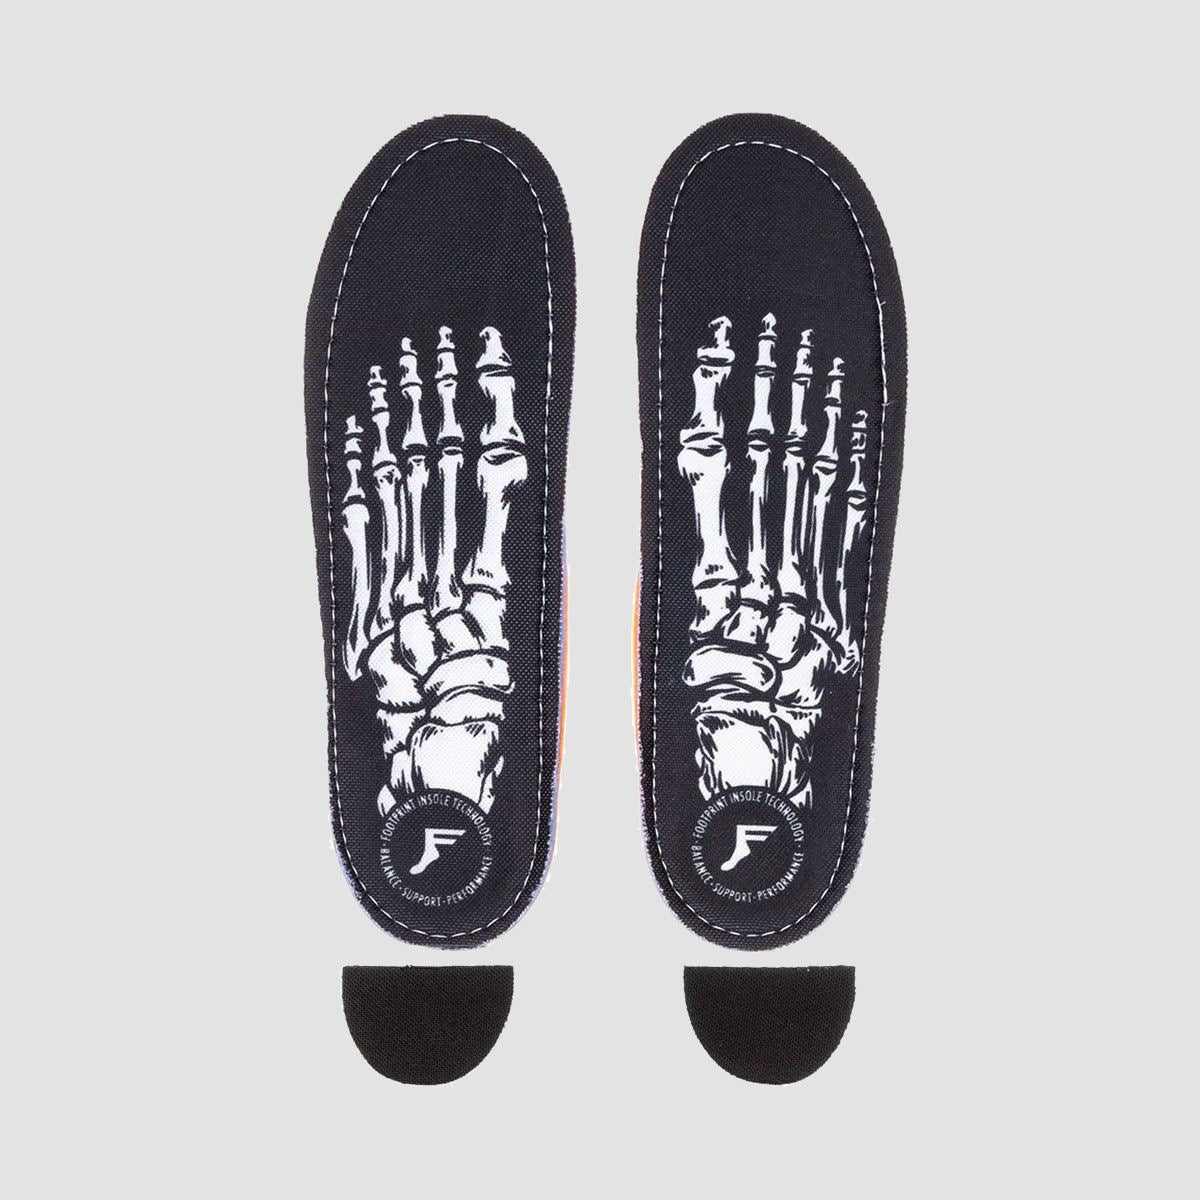 Footprint Kingfoam Insoles Skeleton Black